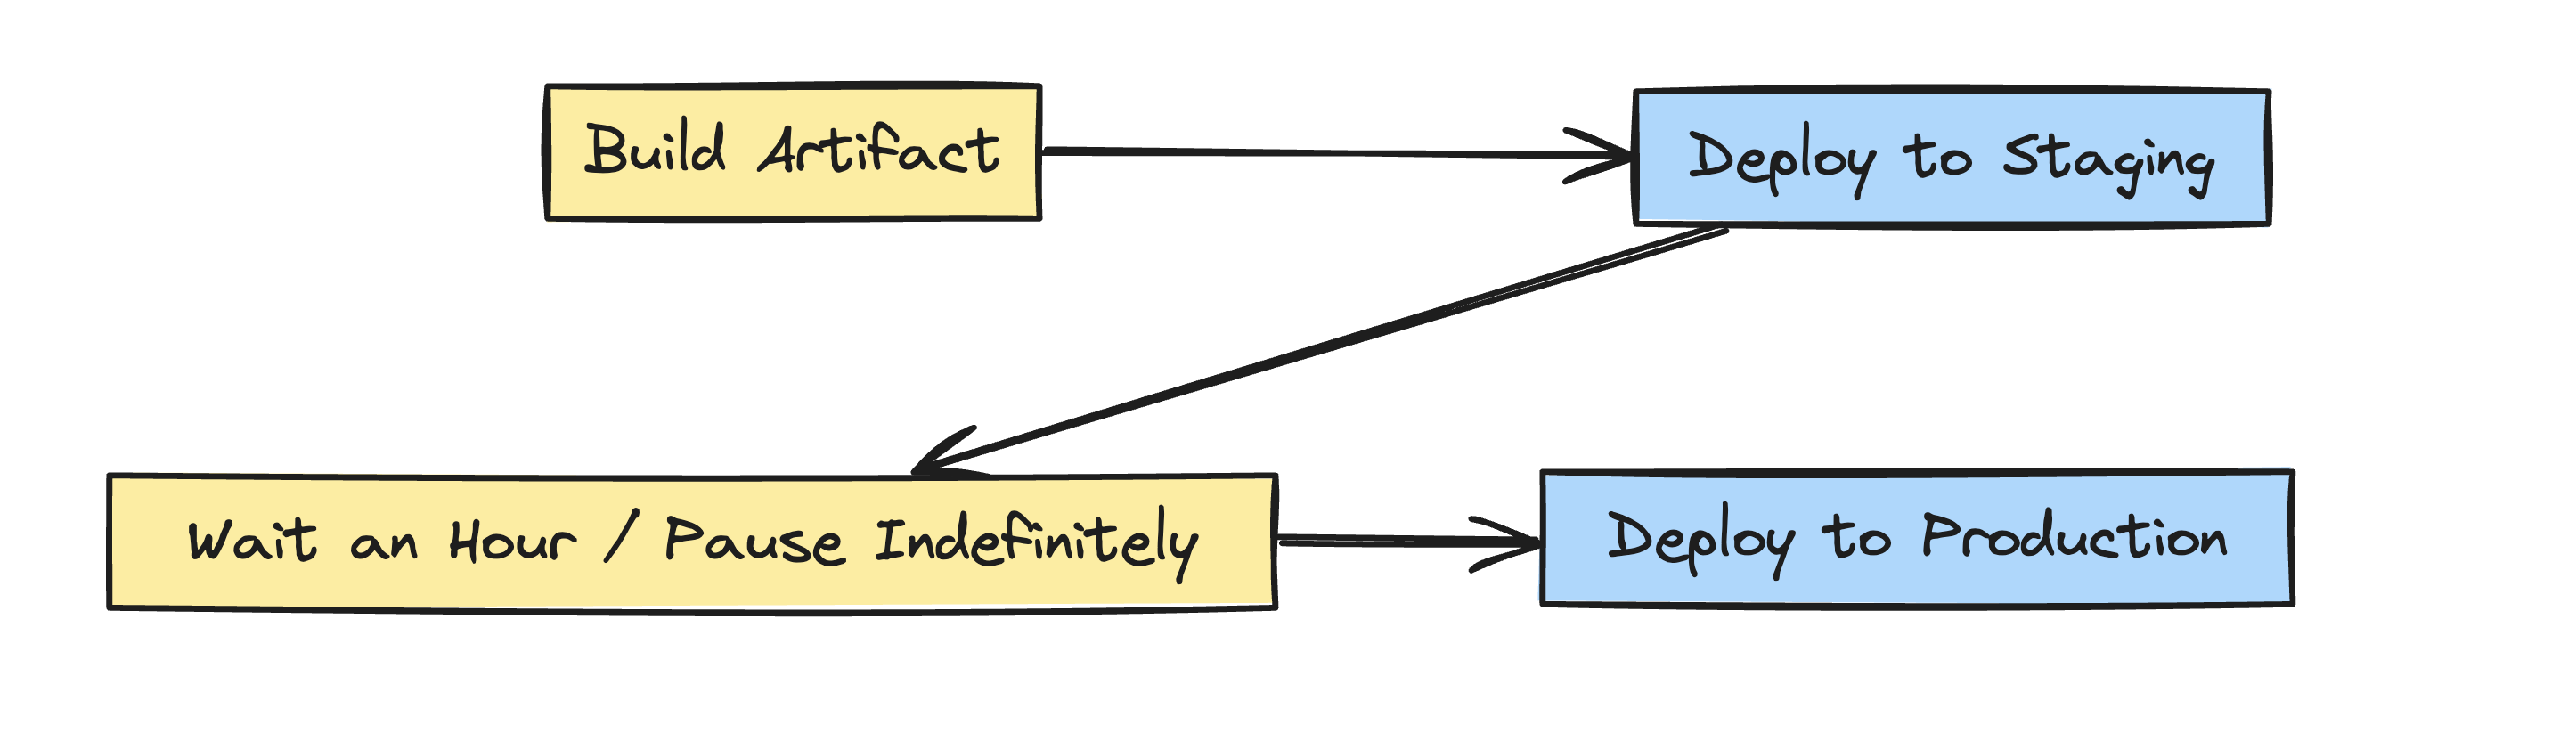 deployment model diagram